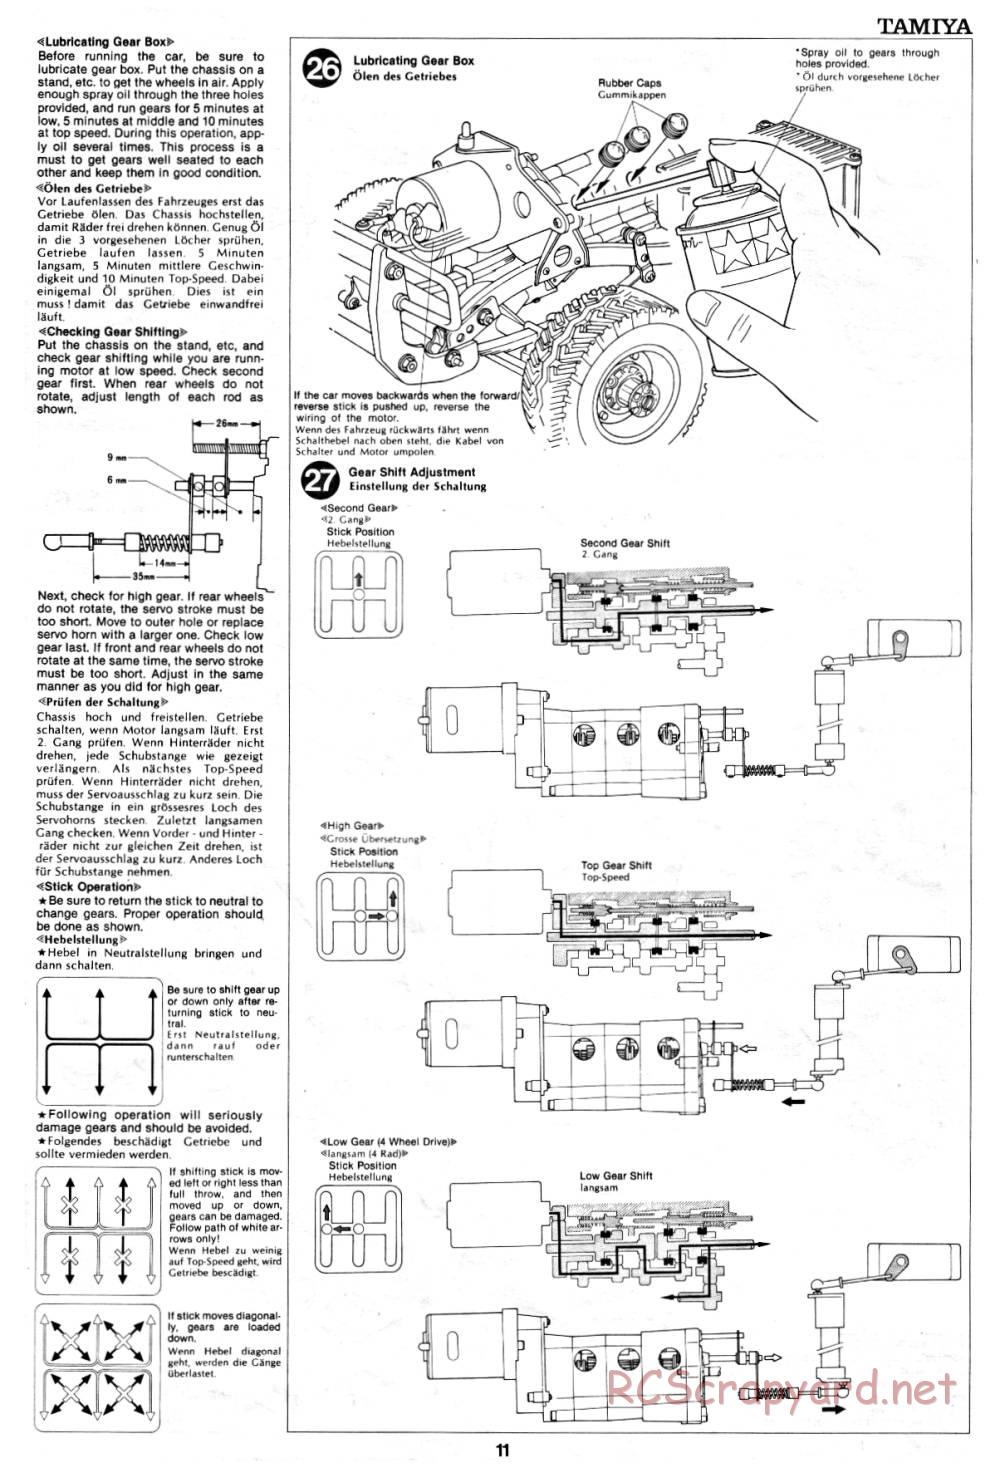 Tamiya - Toyota 4x4 Pick-Up - 58028 - Manual - Page 11